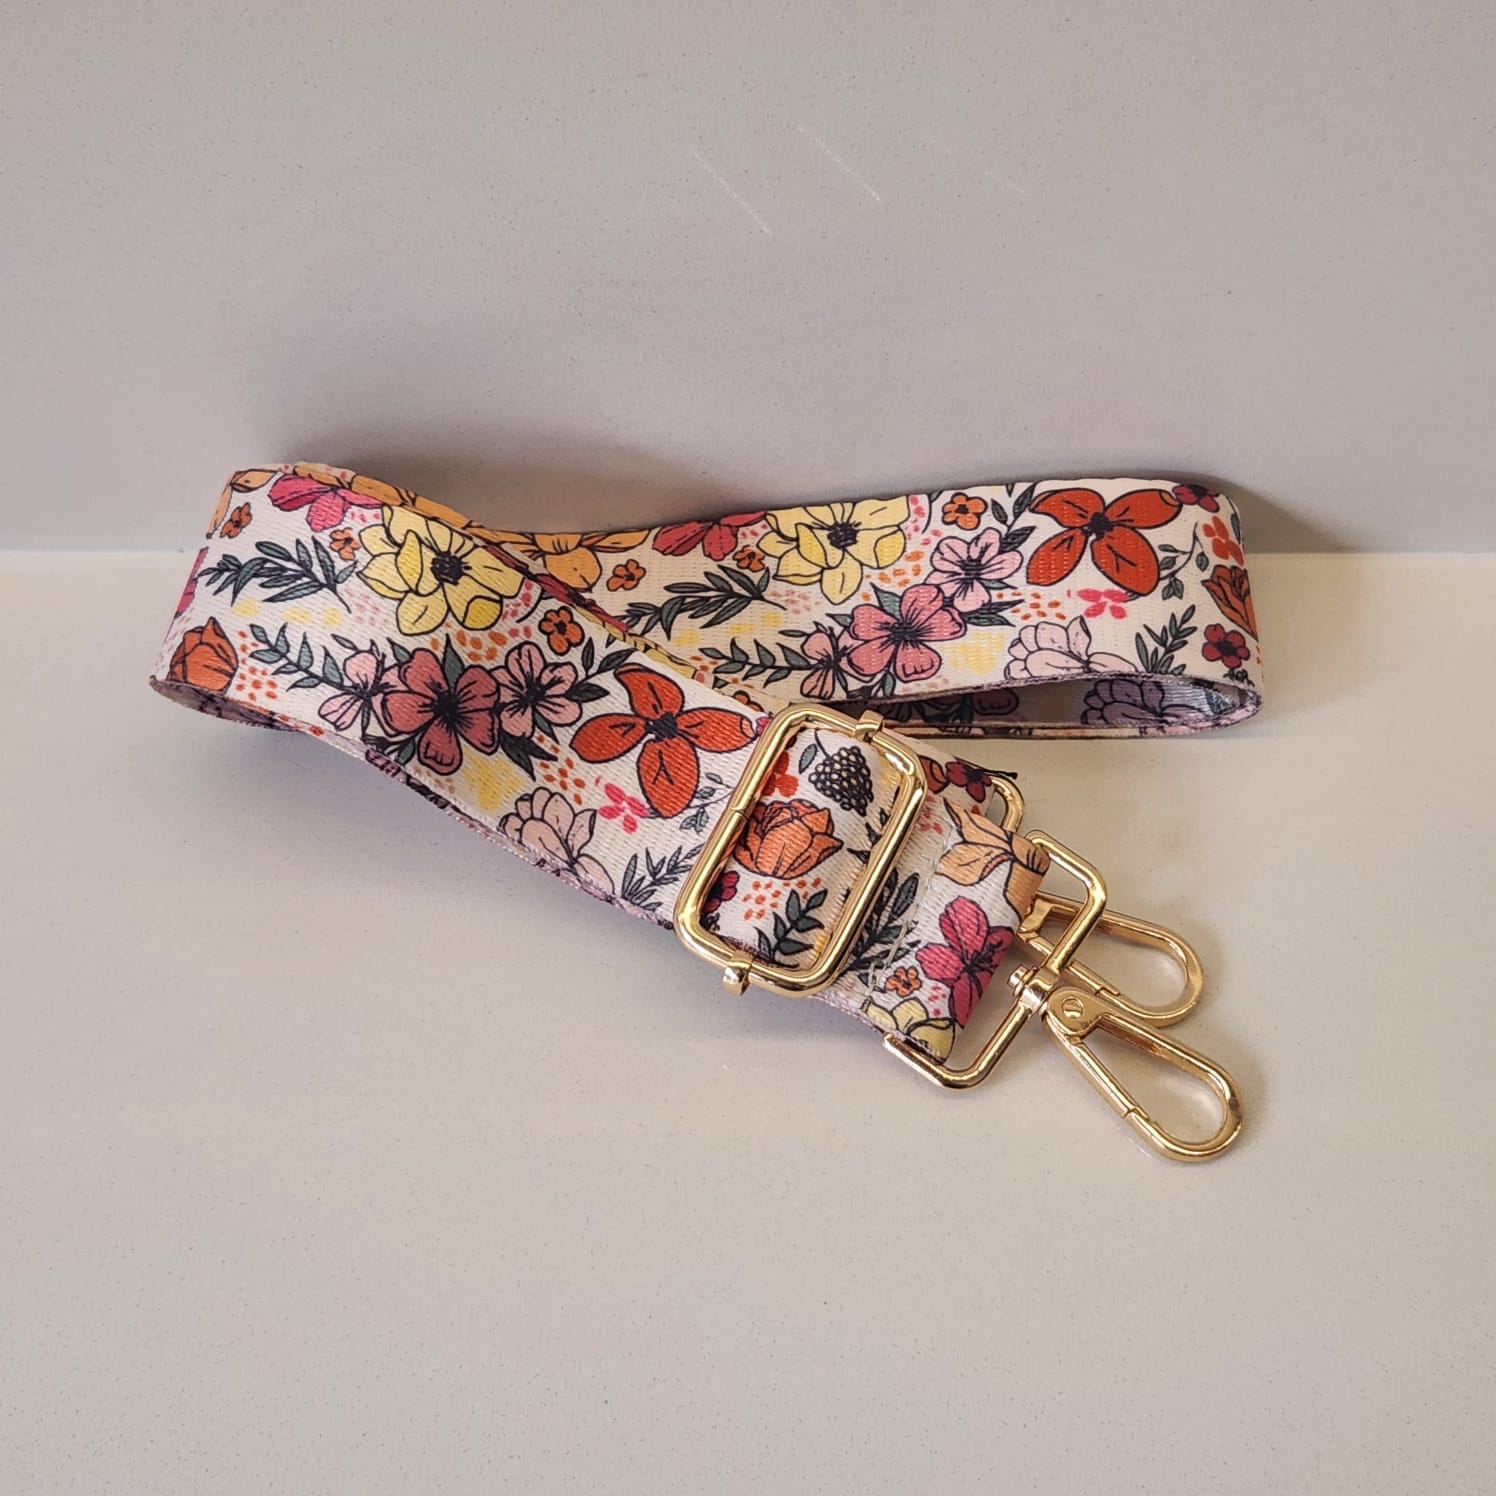 Suprene Bags Handbag & Wallet Accessories Bag Strap - Floral Whimsy